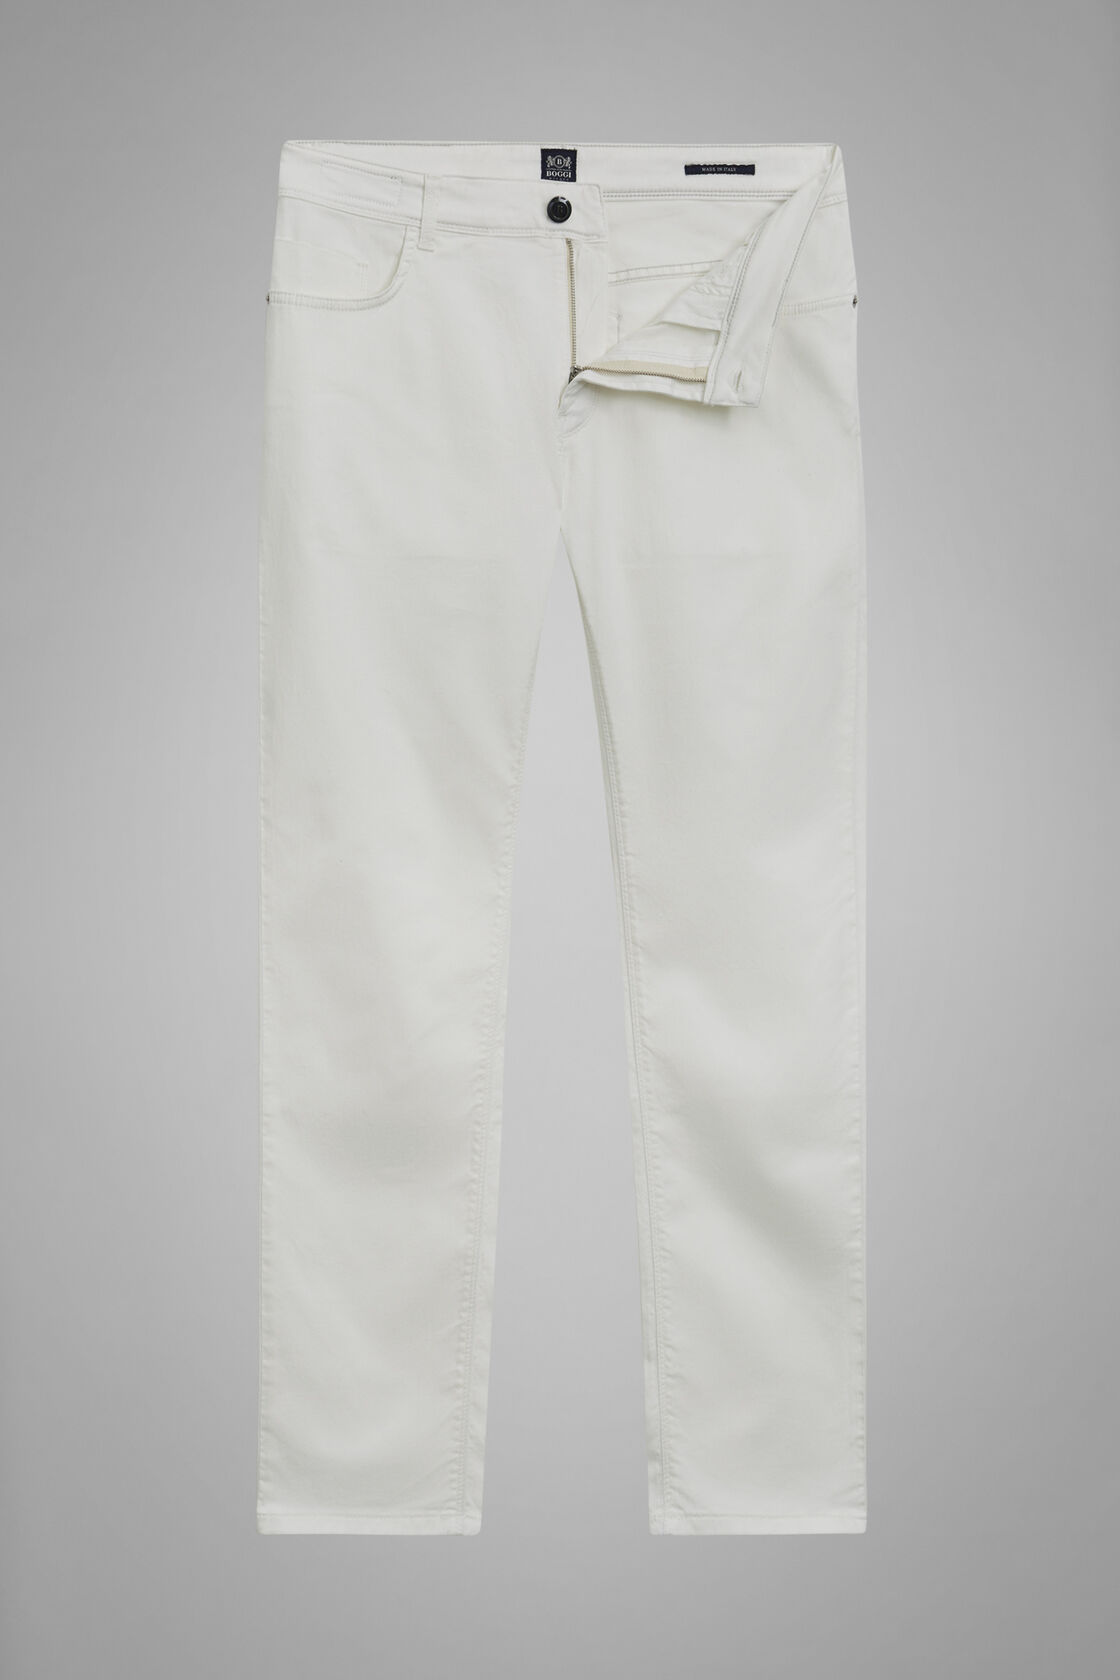 5 pockets trousers in cotton tencel gabardine reg, , hi-res